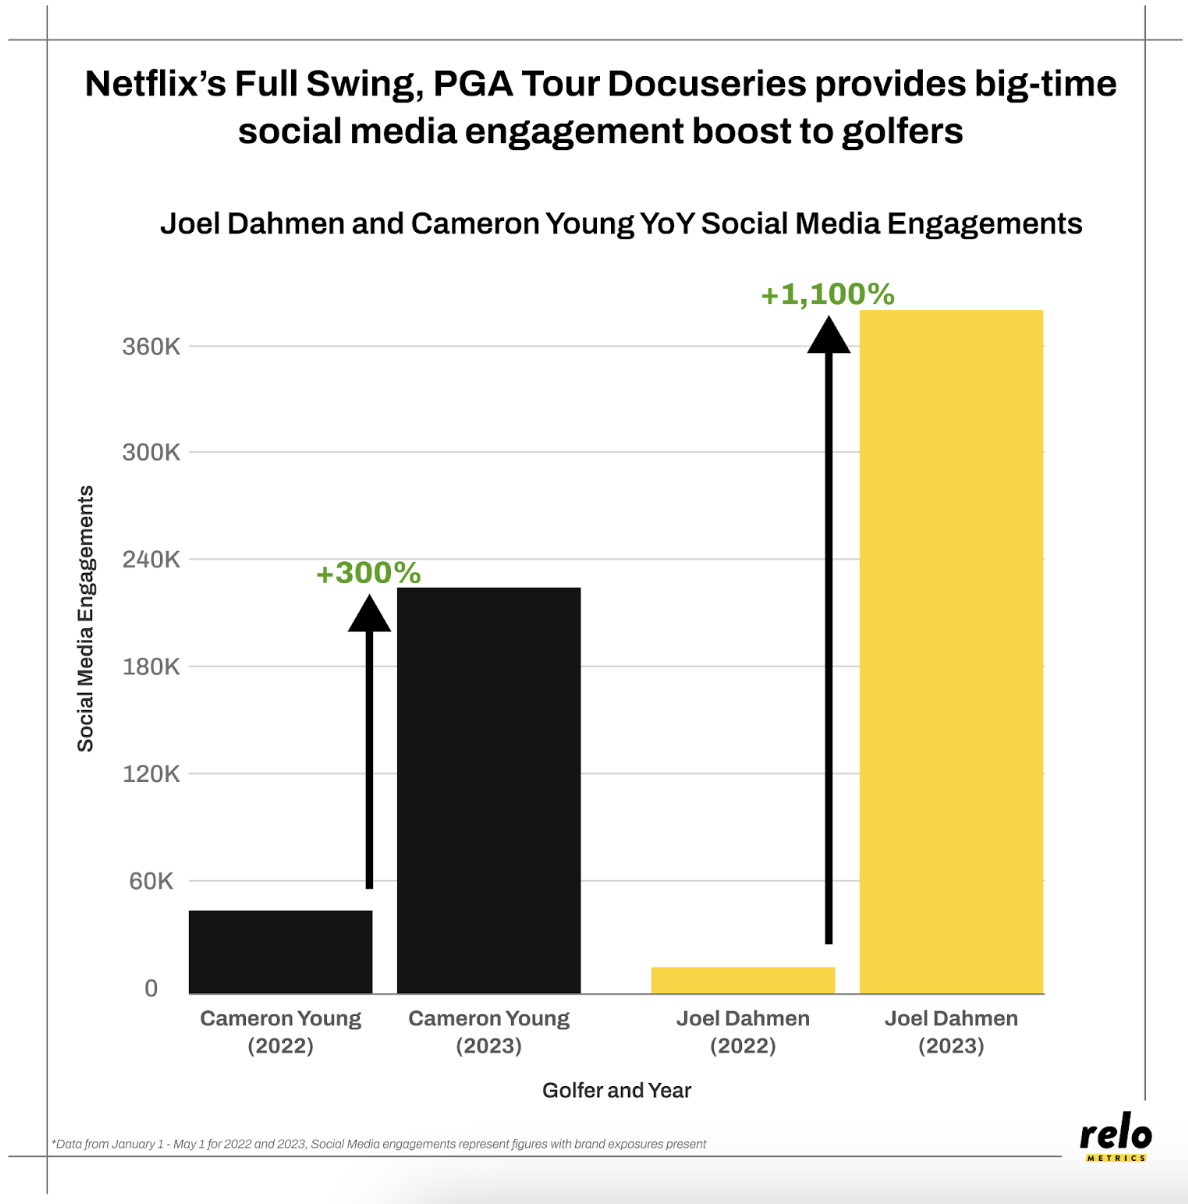 Netflix's Full Swing, PGA Tour Docuseries provides big-time social media engagement boost to golfers